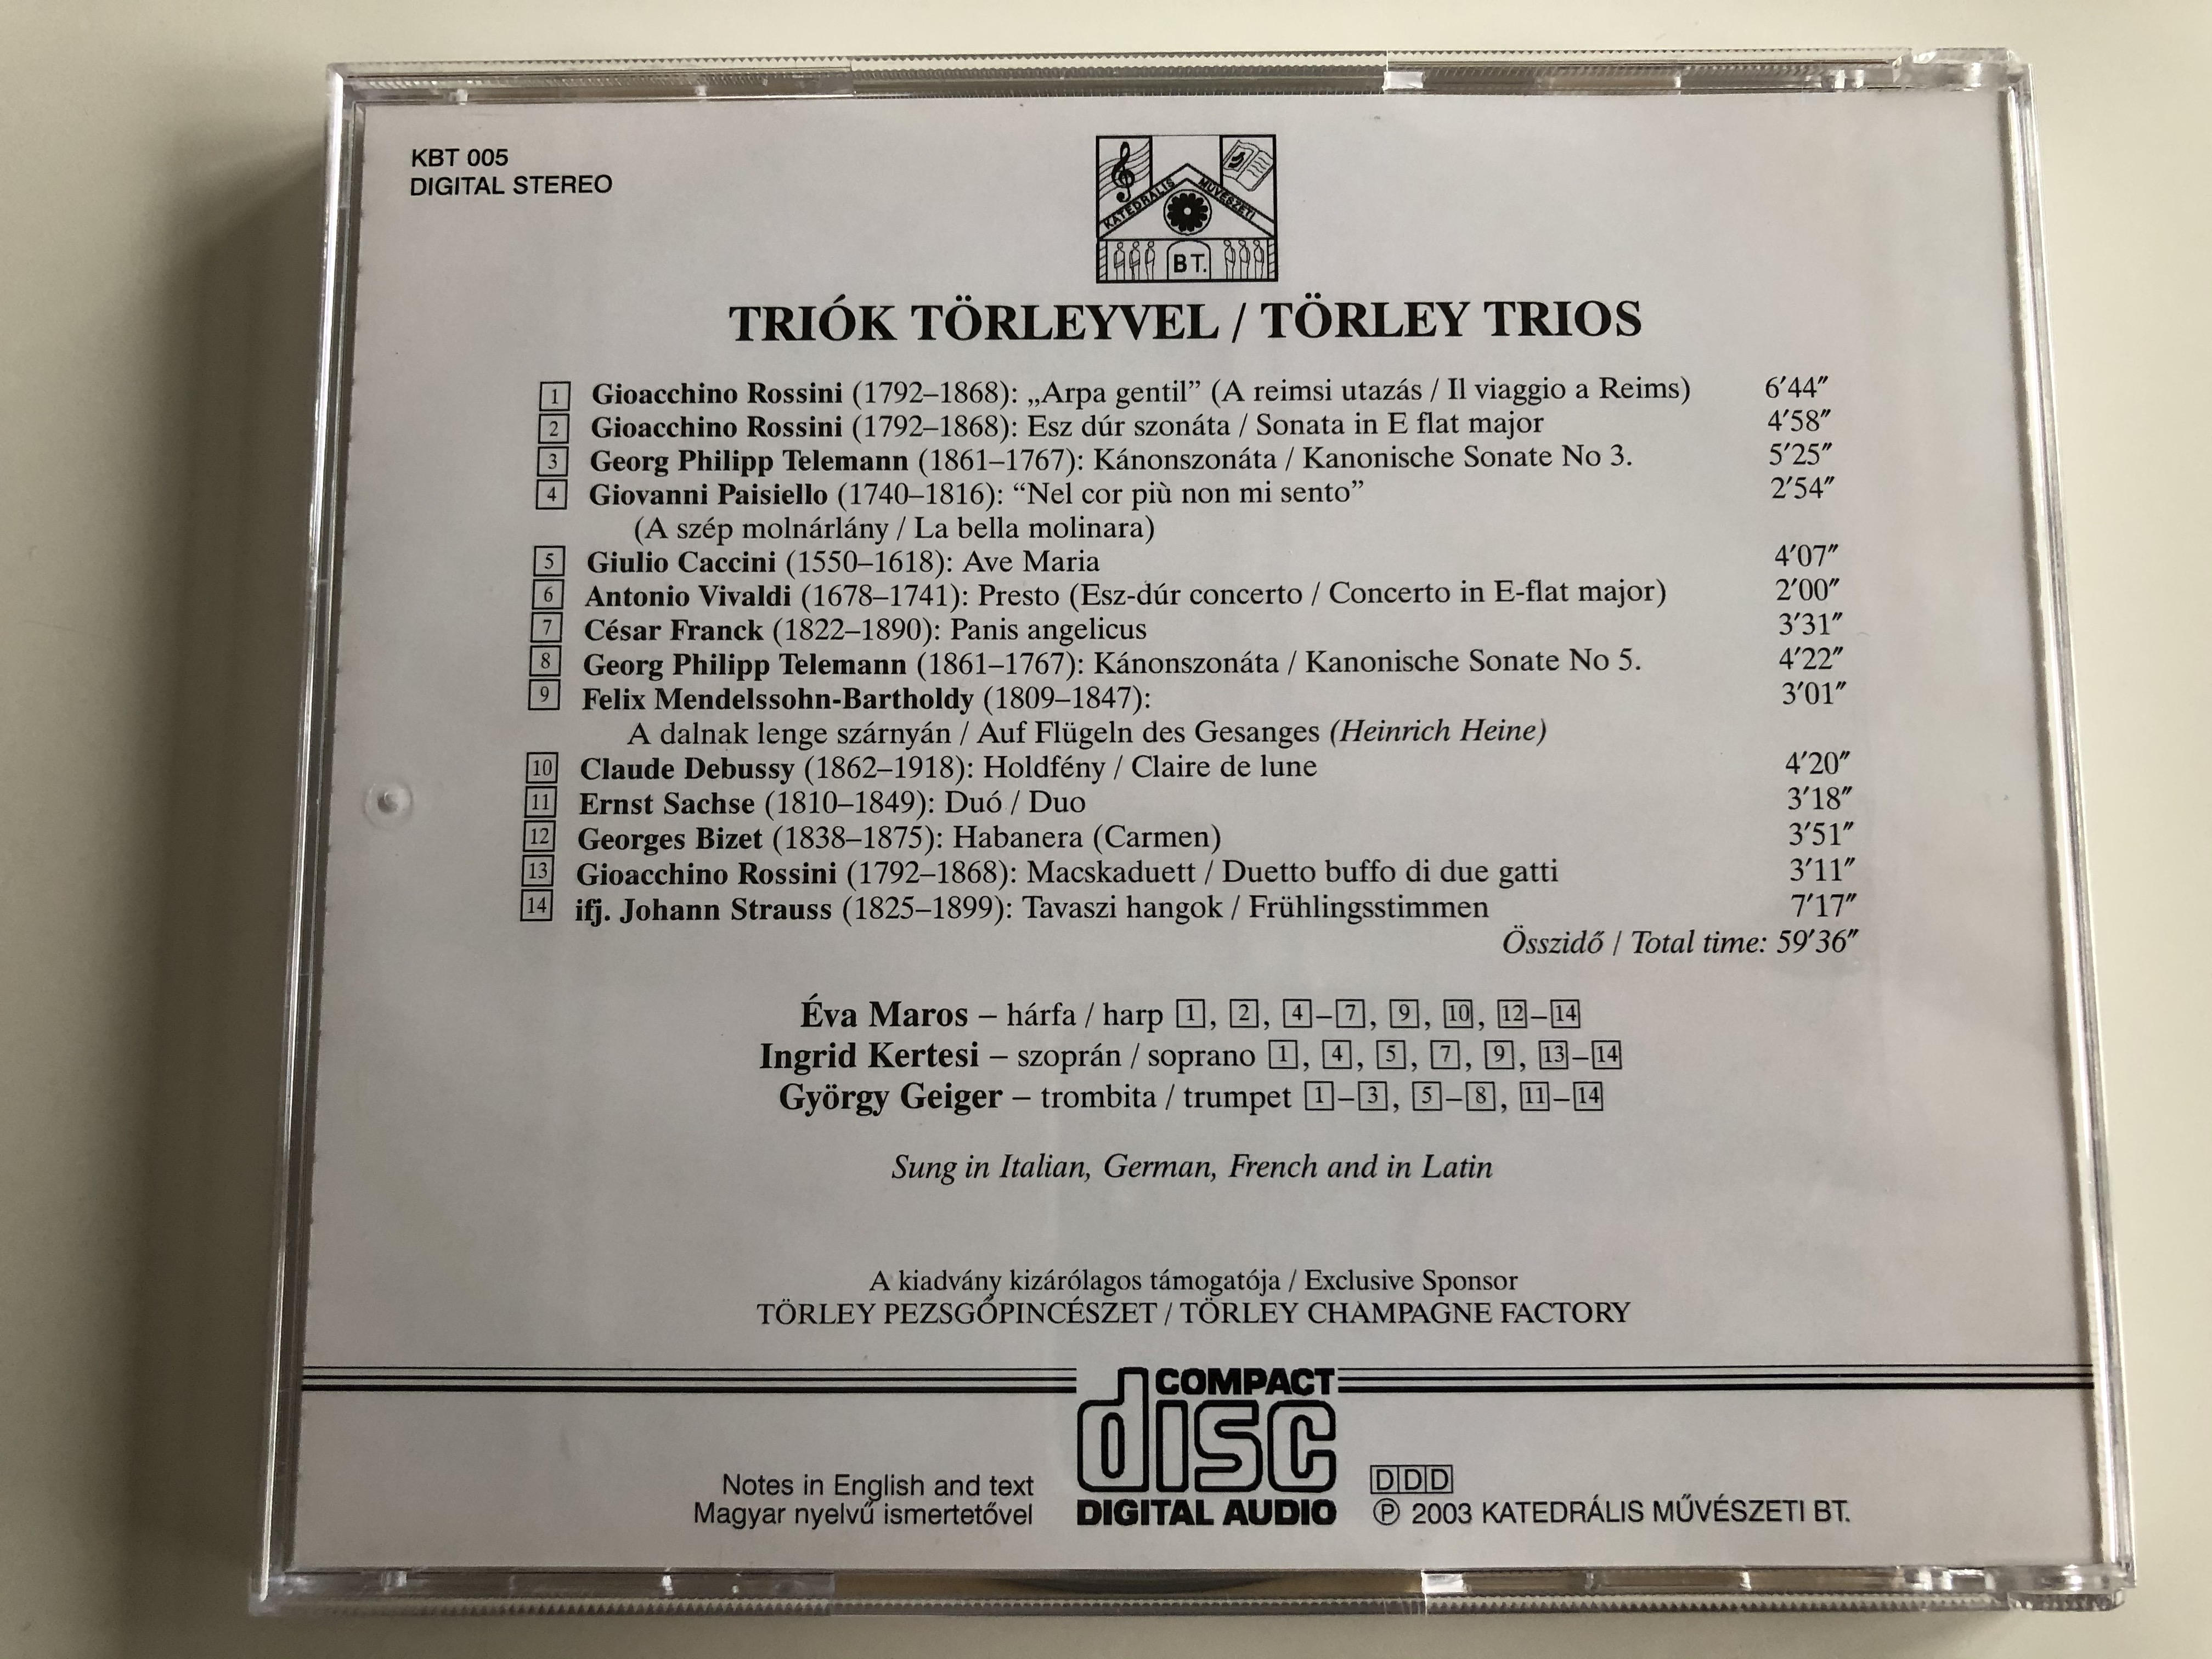 triok-torleyvel-torley-trios-katedralis-muveszeti-bt.-audio-cd-2003-stereo-kbt-005-9-.jpg